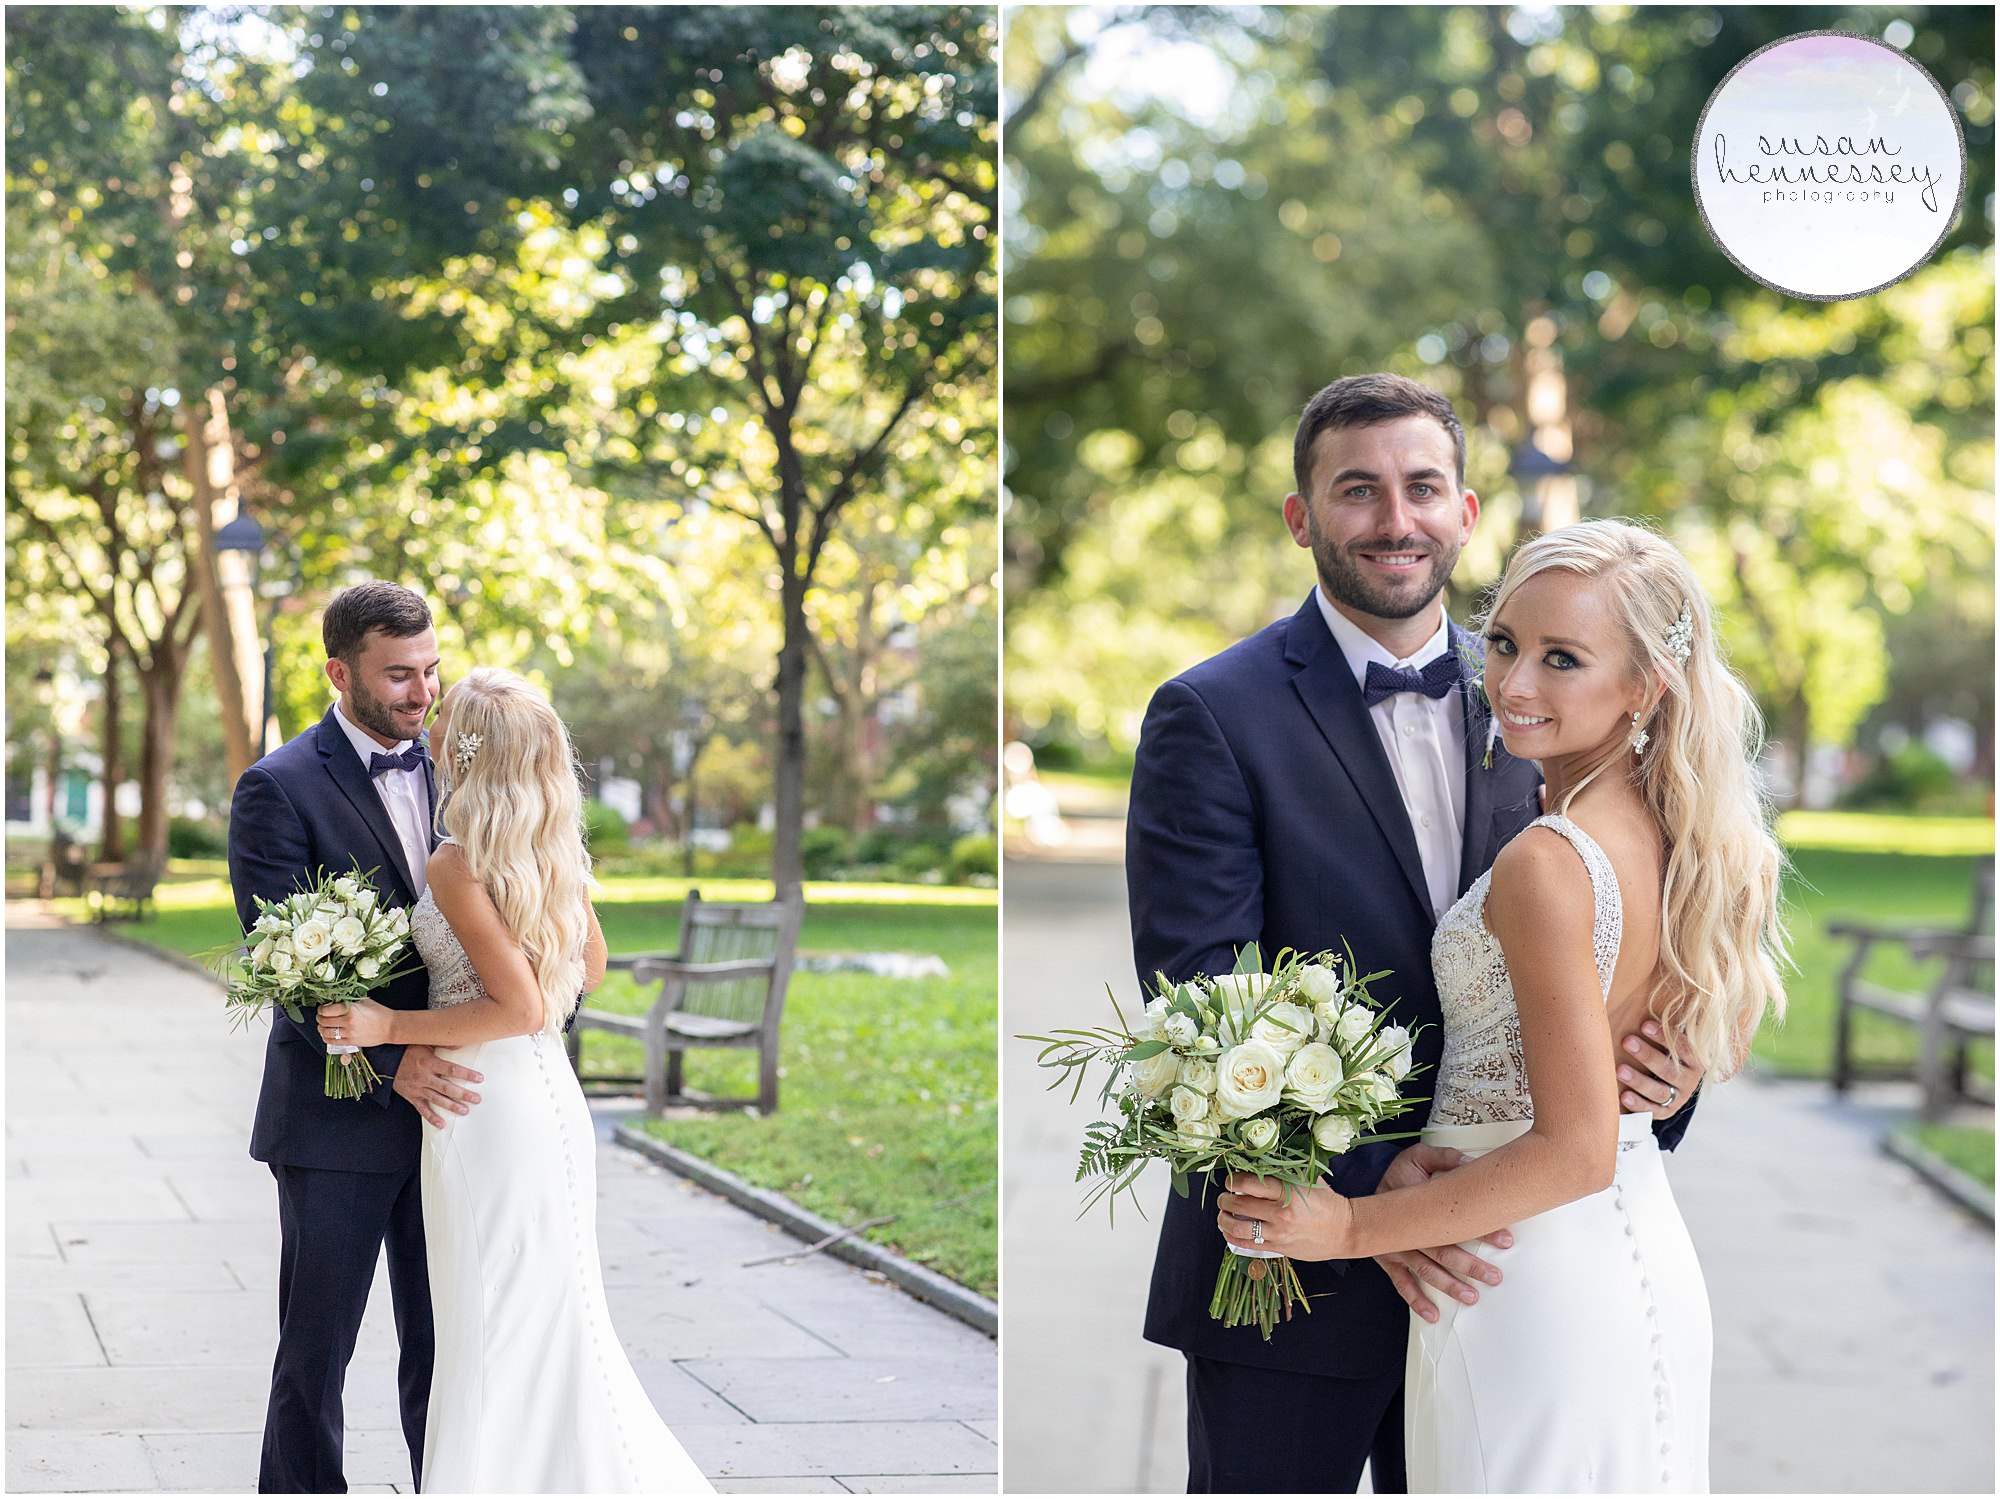 Bride and groom at Washington Square Park Philadelphia microwedding